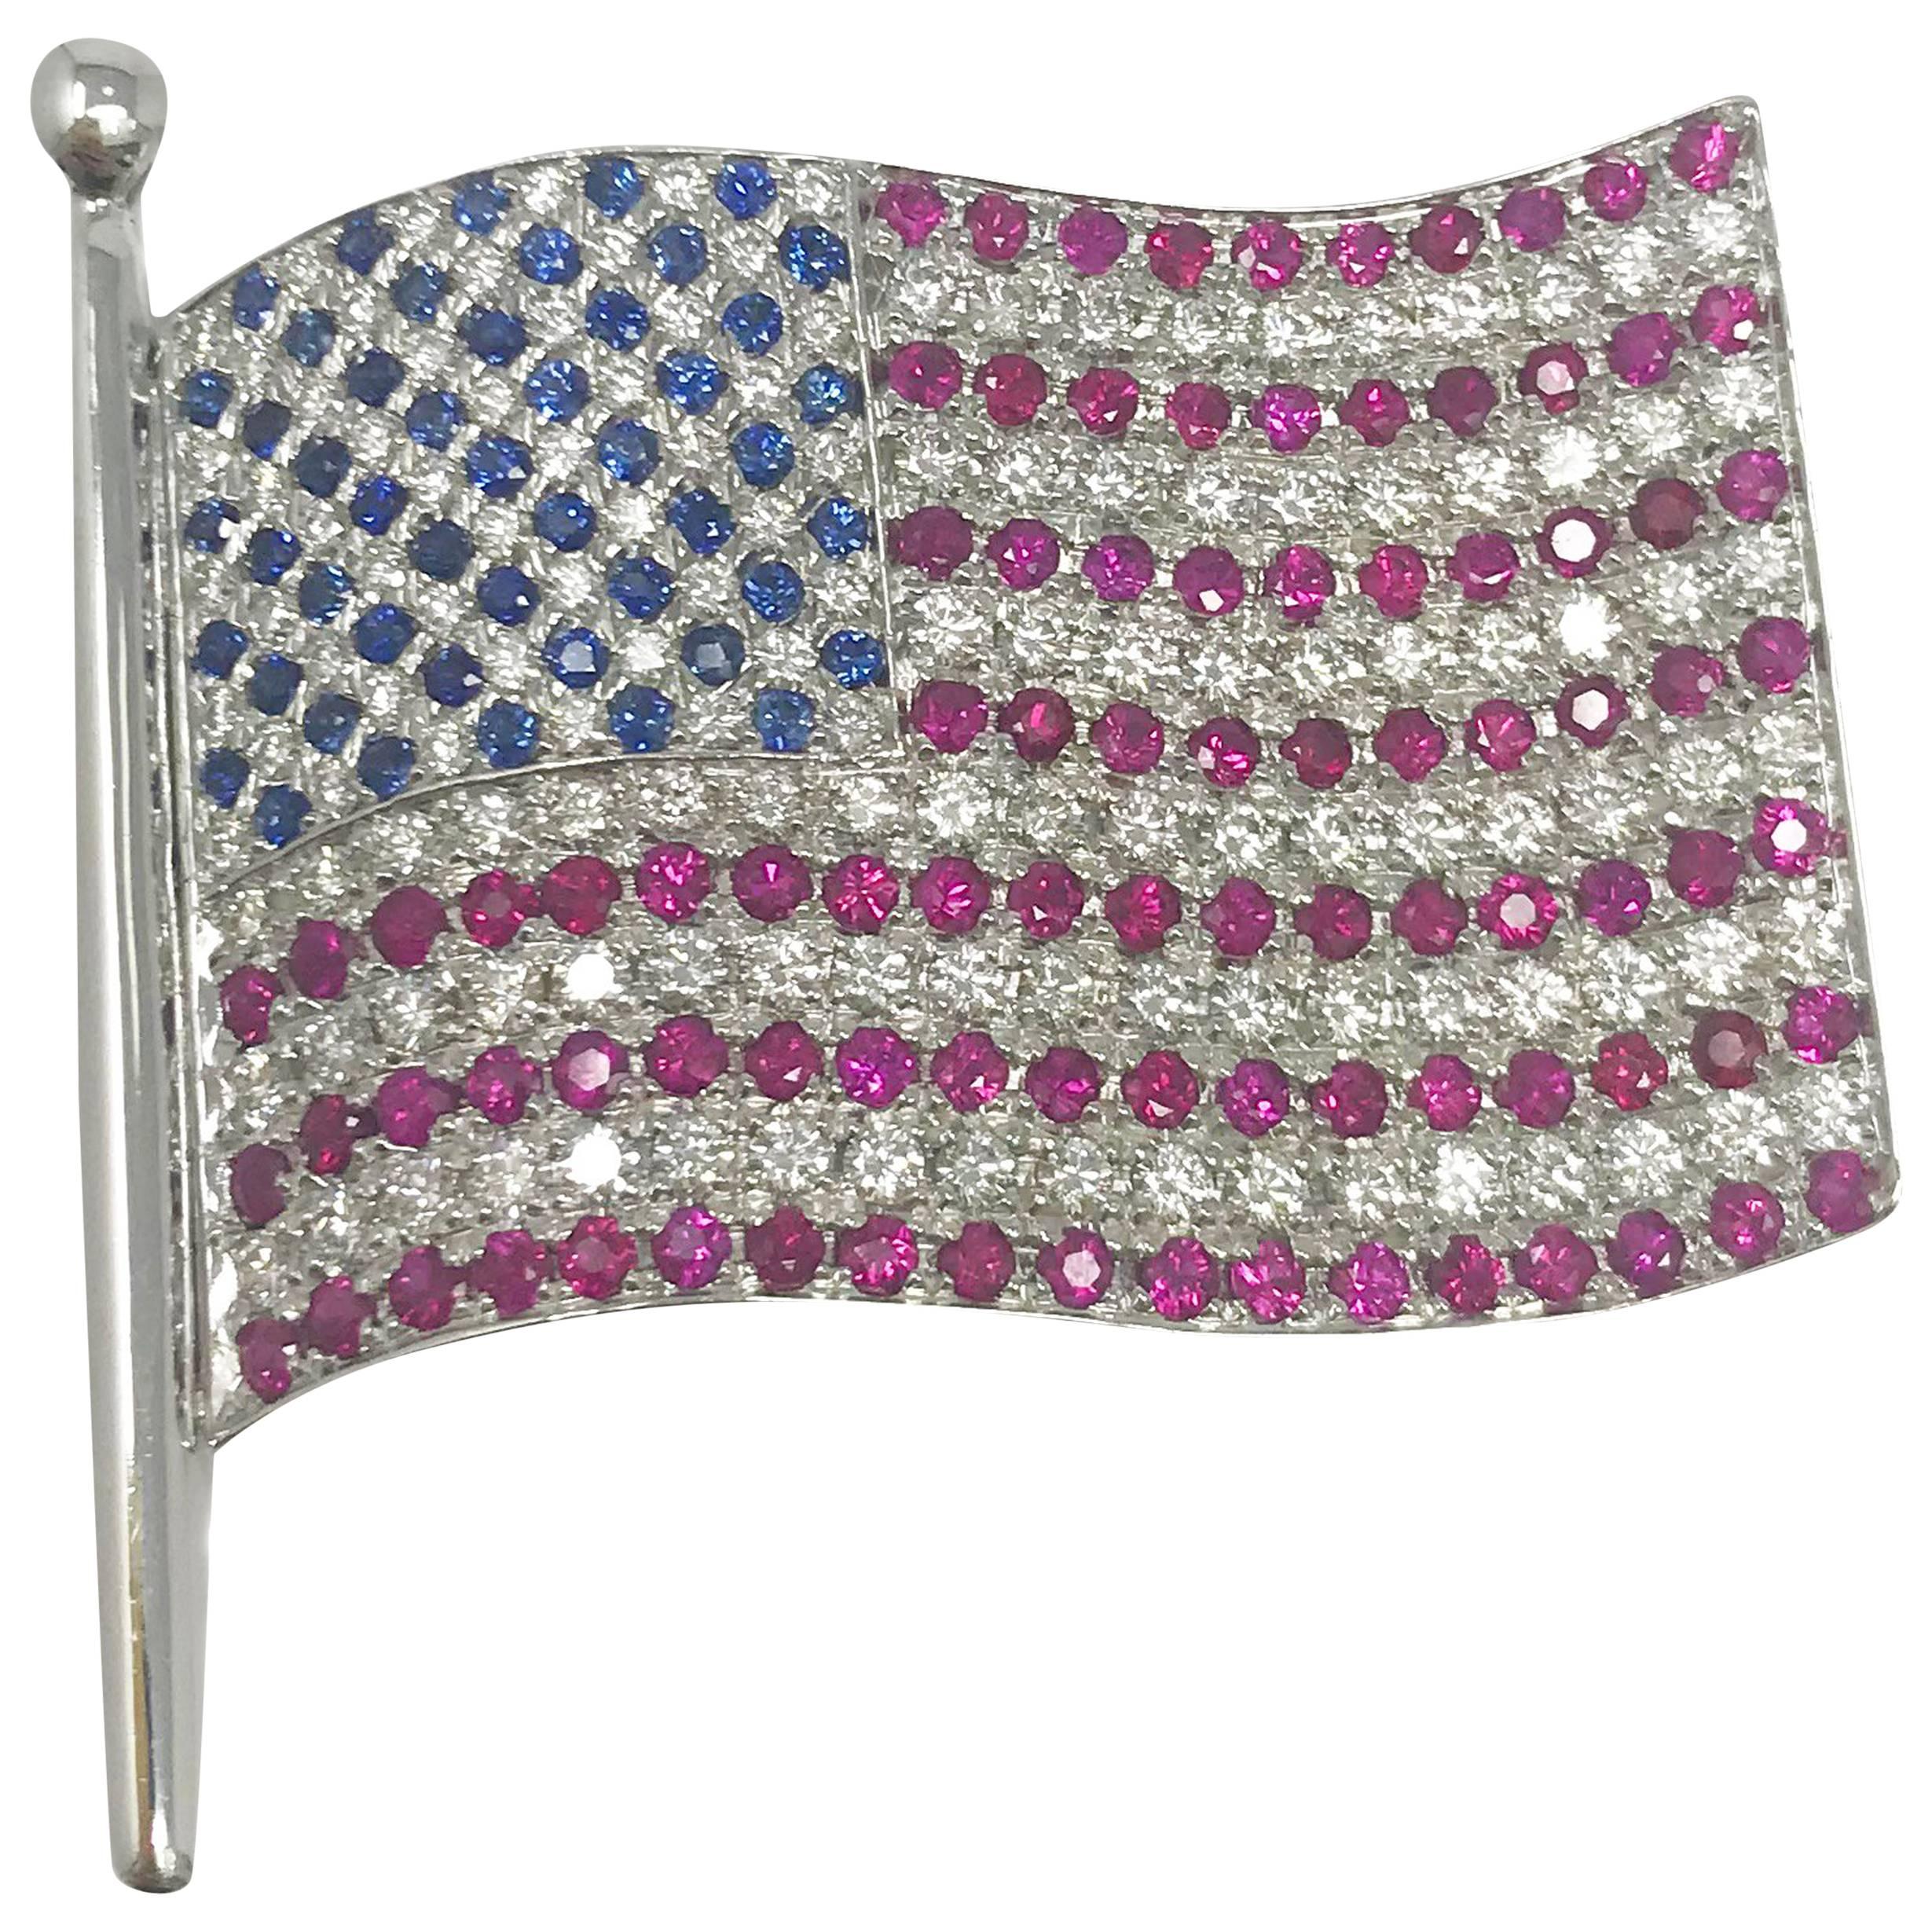 18K WG 2.04 Ct Diamond, .55 Ct Sapphire, 3.15 Ct Ruby American Flag Brooch Pin For Sale